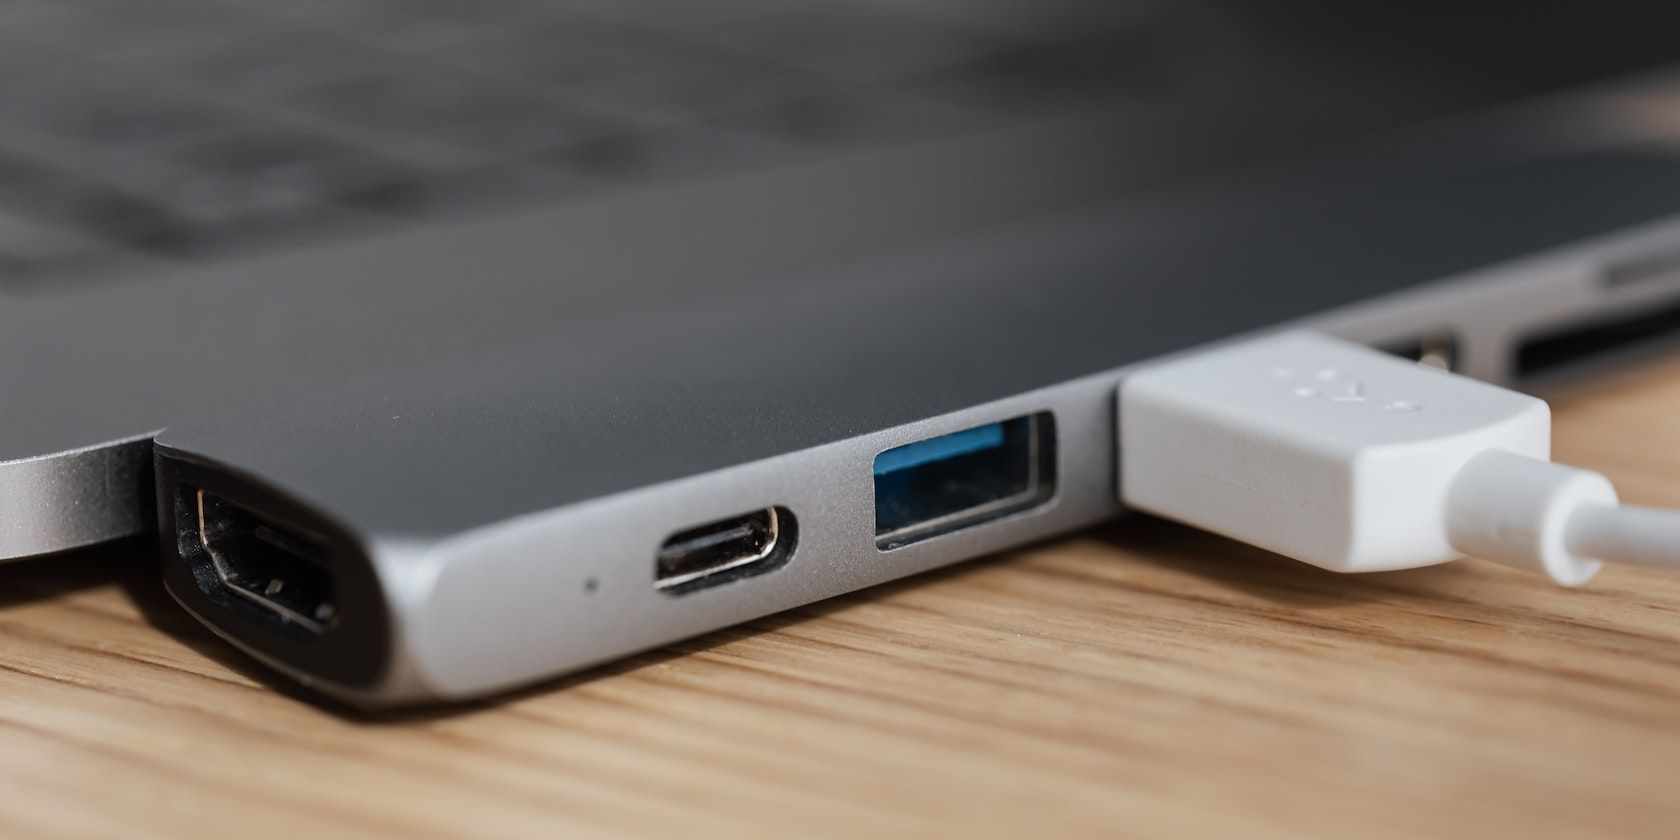 USB hub type c dock adapter connected to MacBook